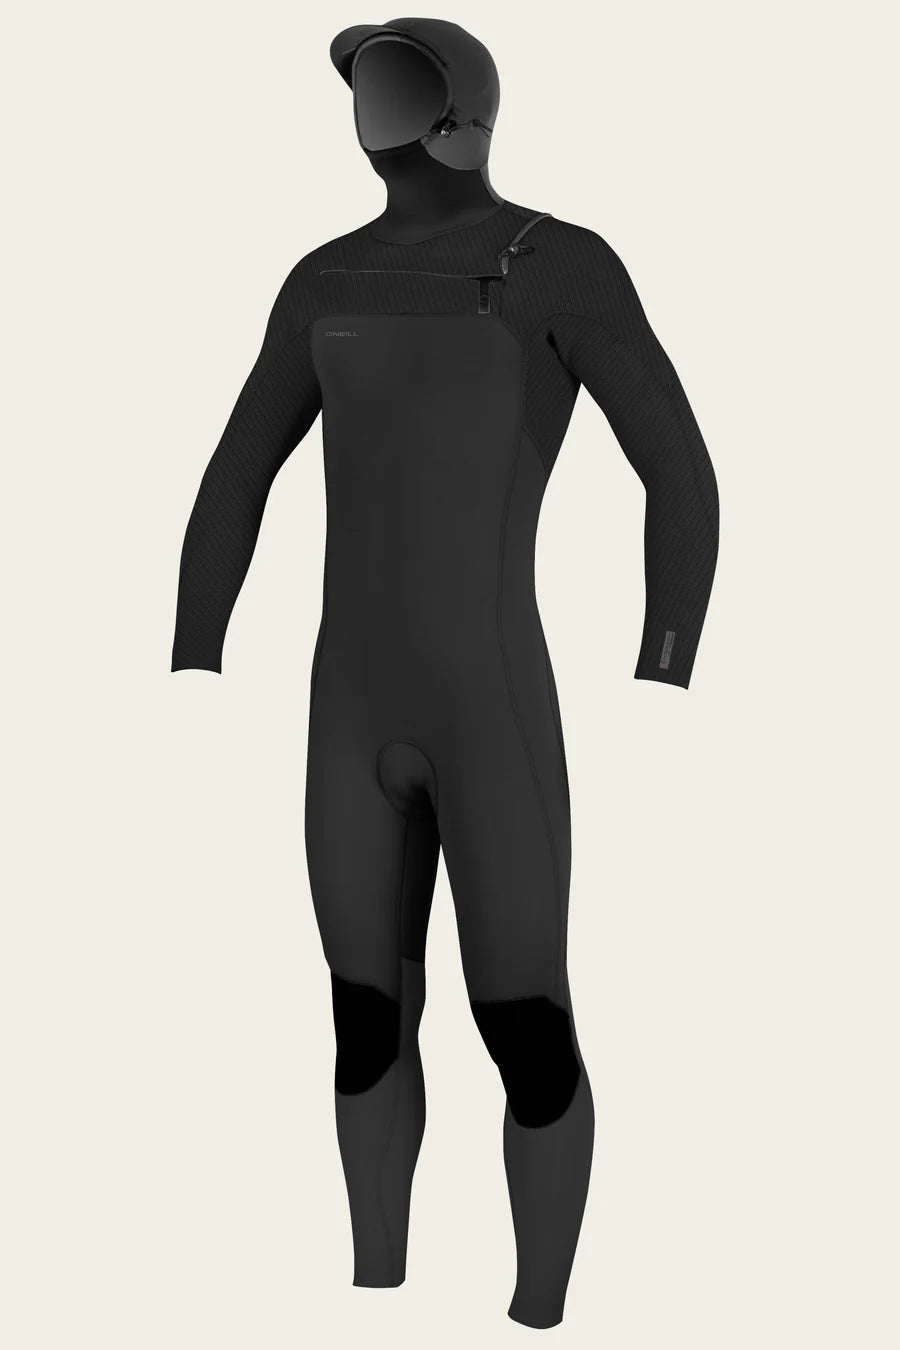 O'Neill Men's Hyperfreak 5/4+mm Chest Zip Full Wetsuit w/ Hood